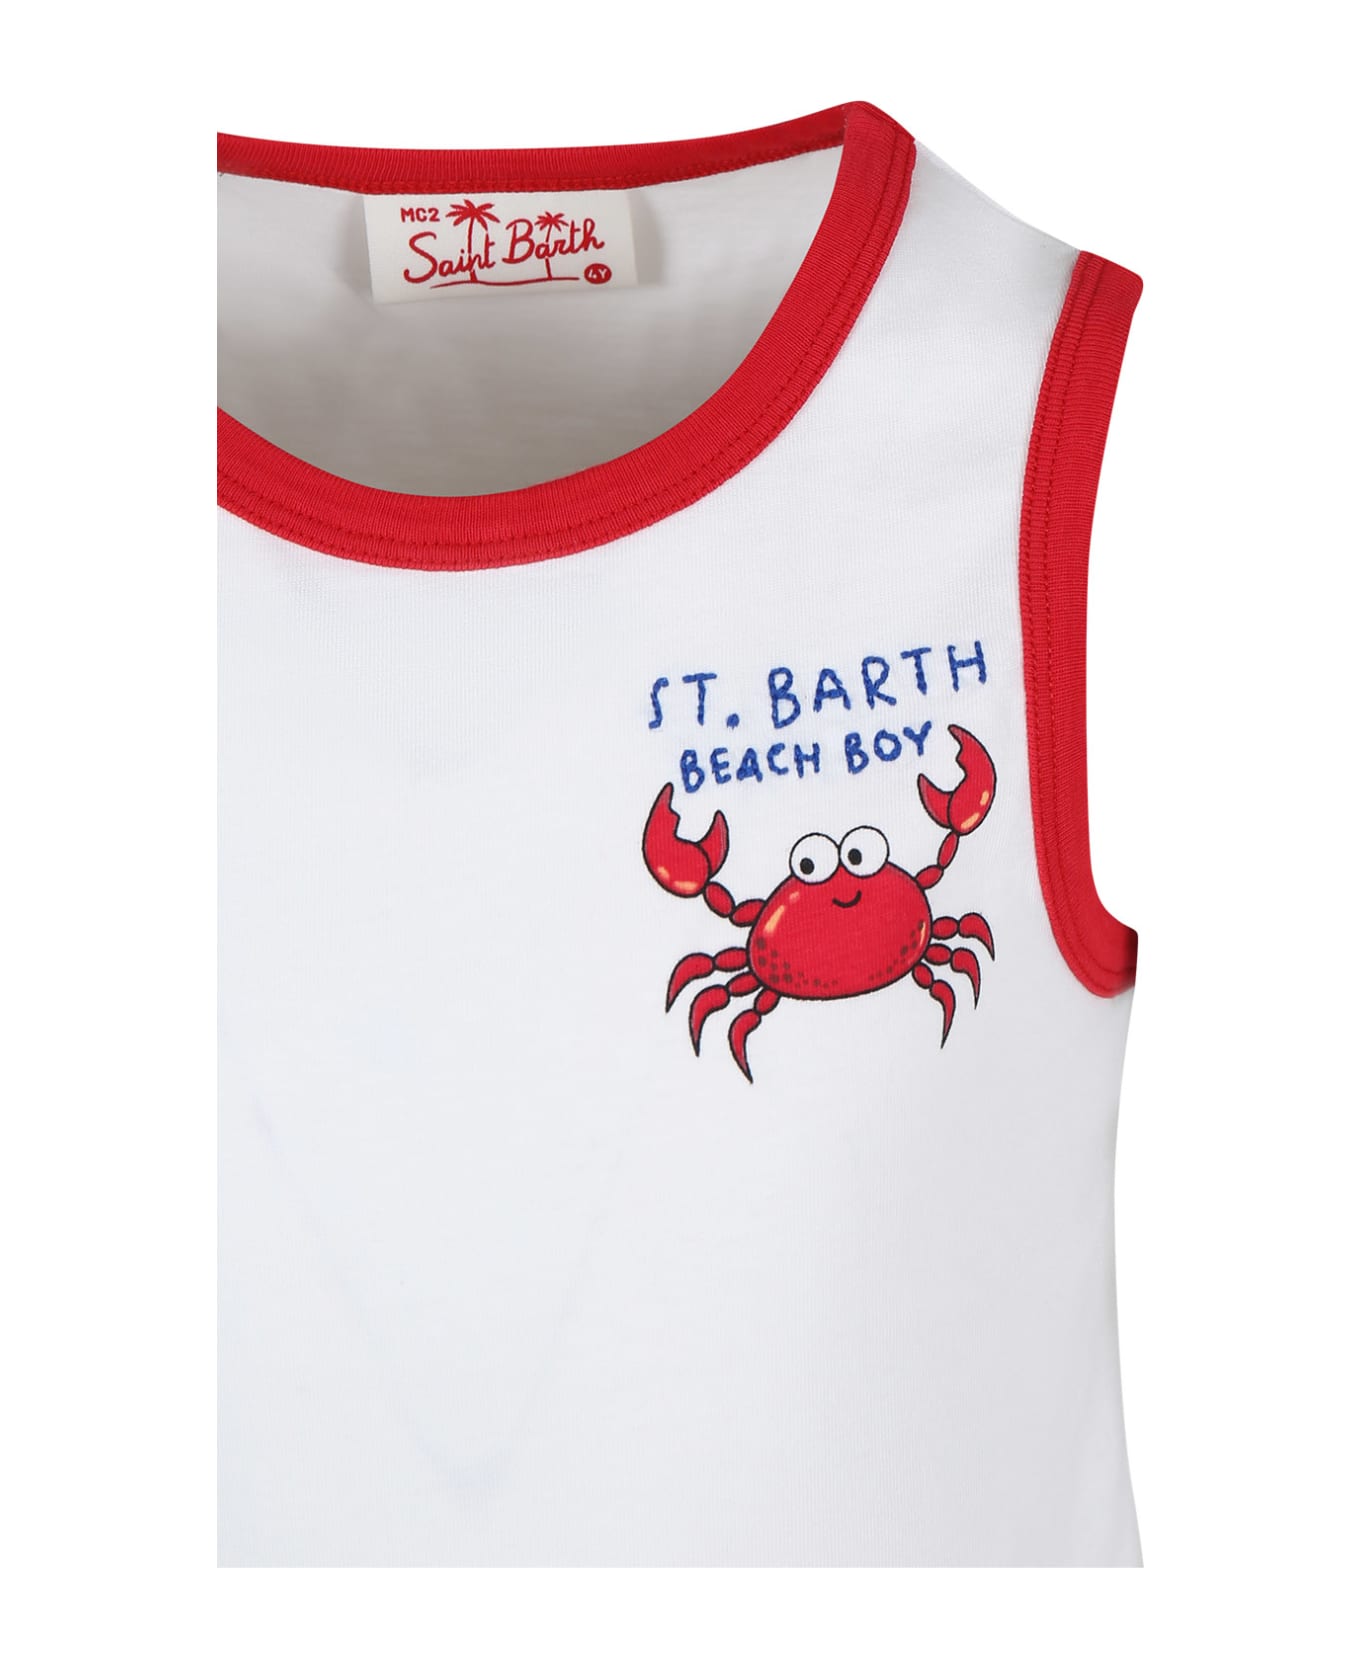 MC2 Saint Barth White Tank Top For Boy With Crab Print - White